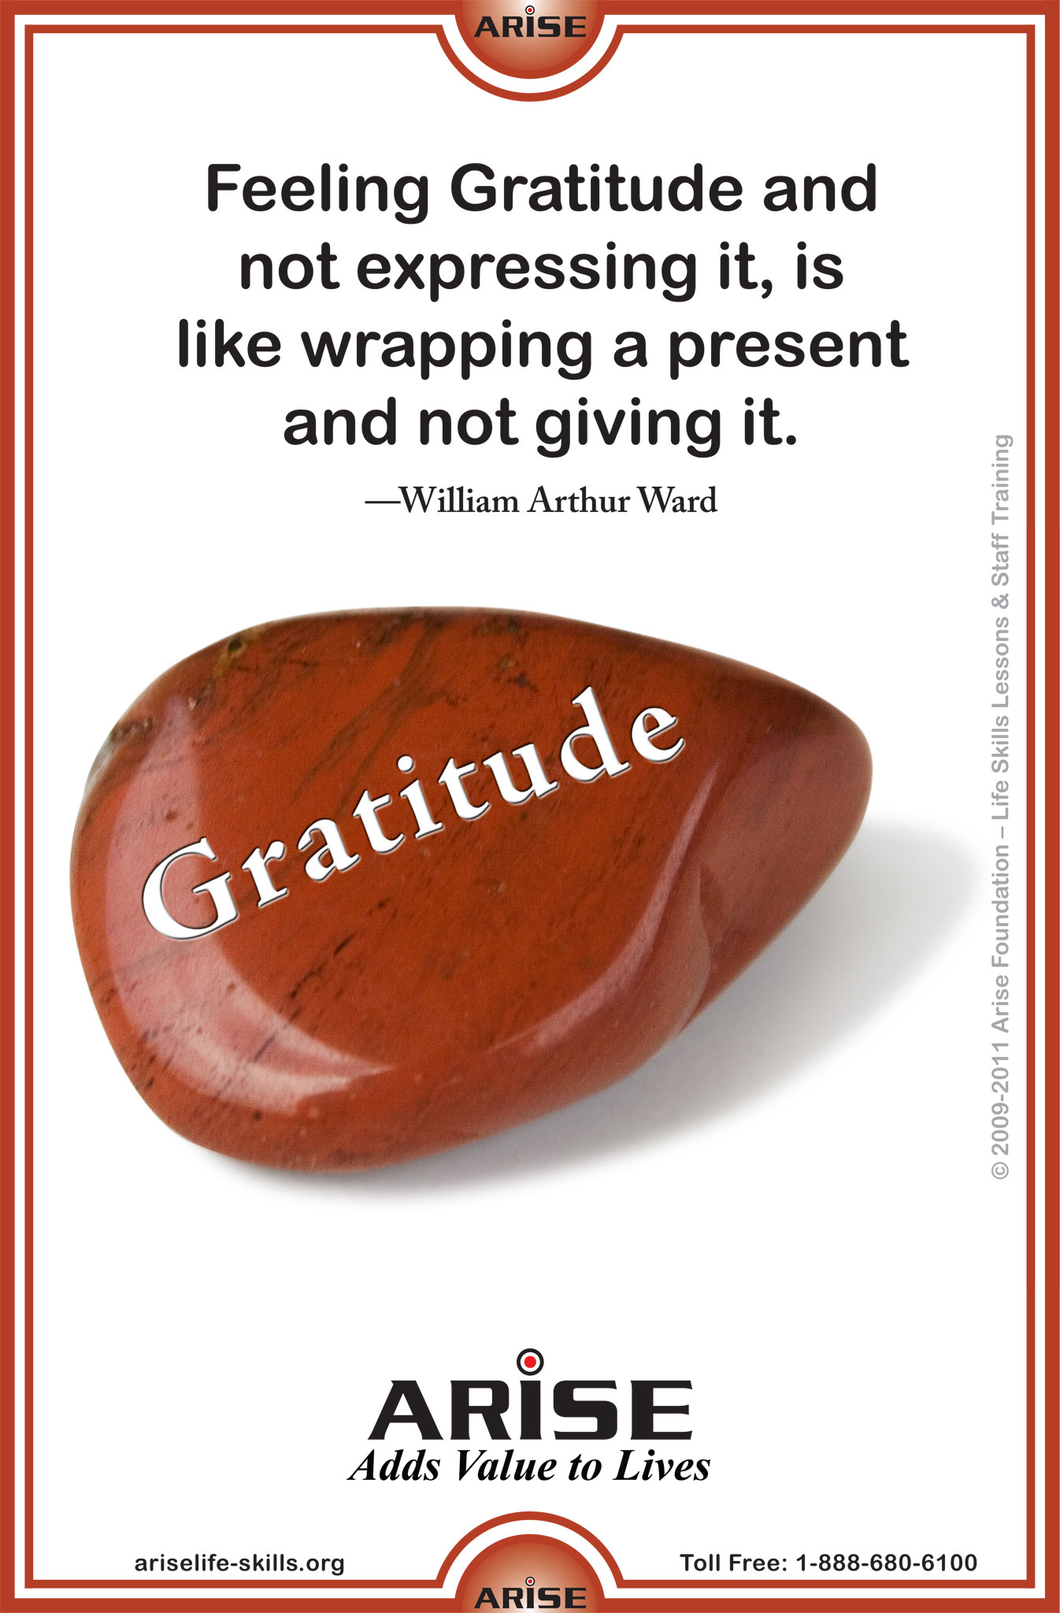 #4 Feeling Gratitude